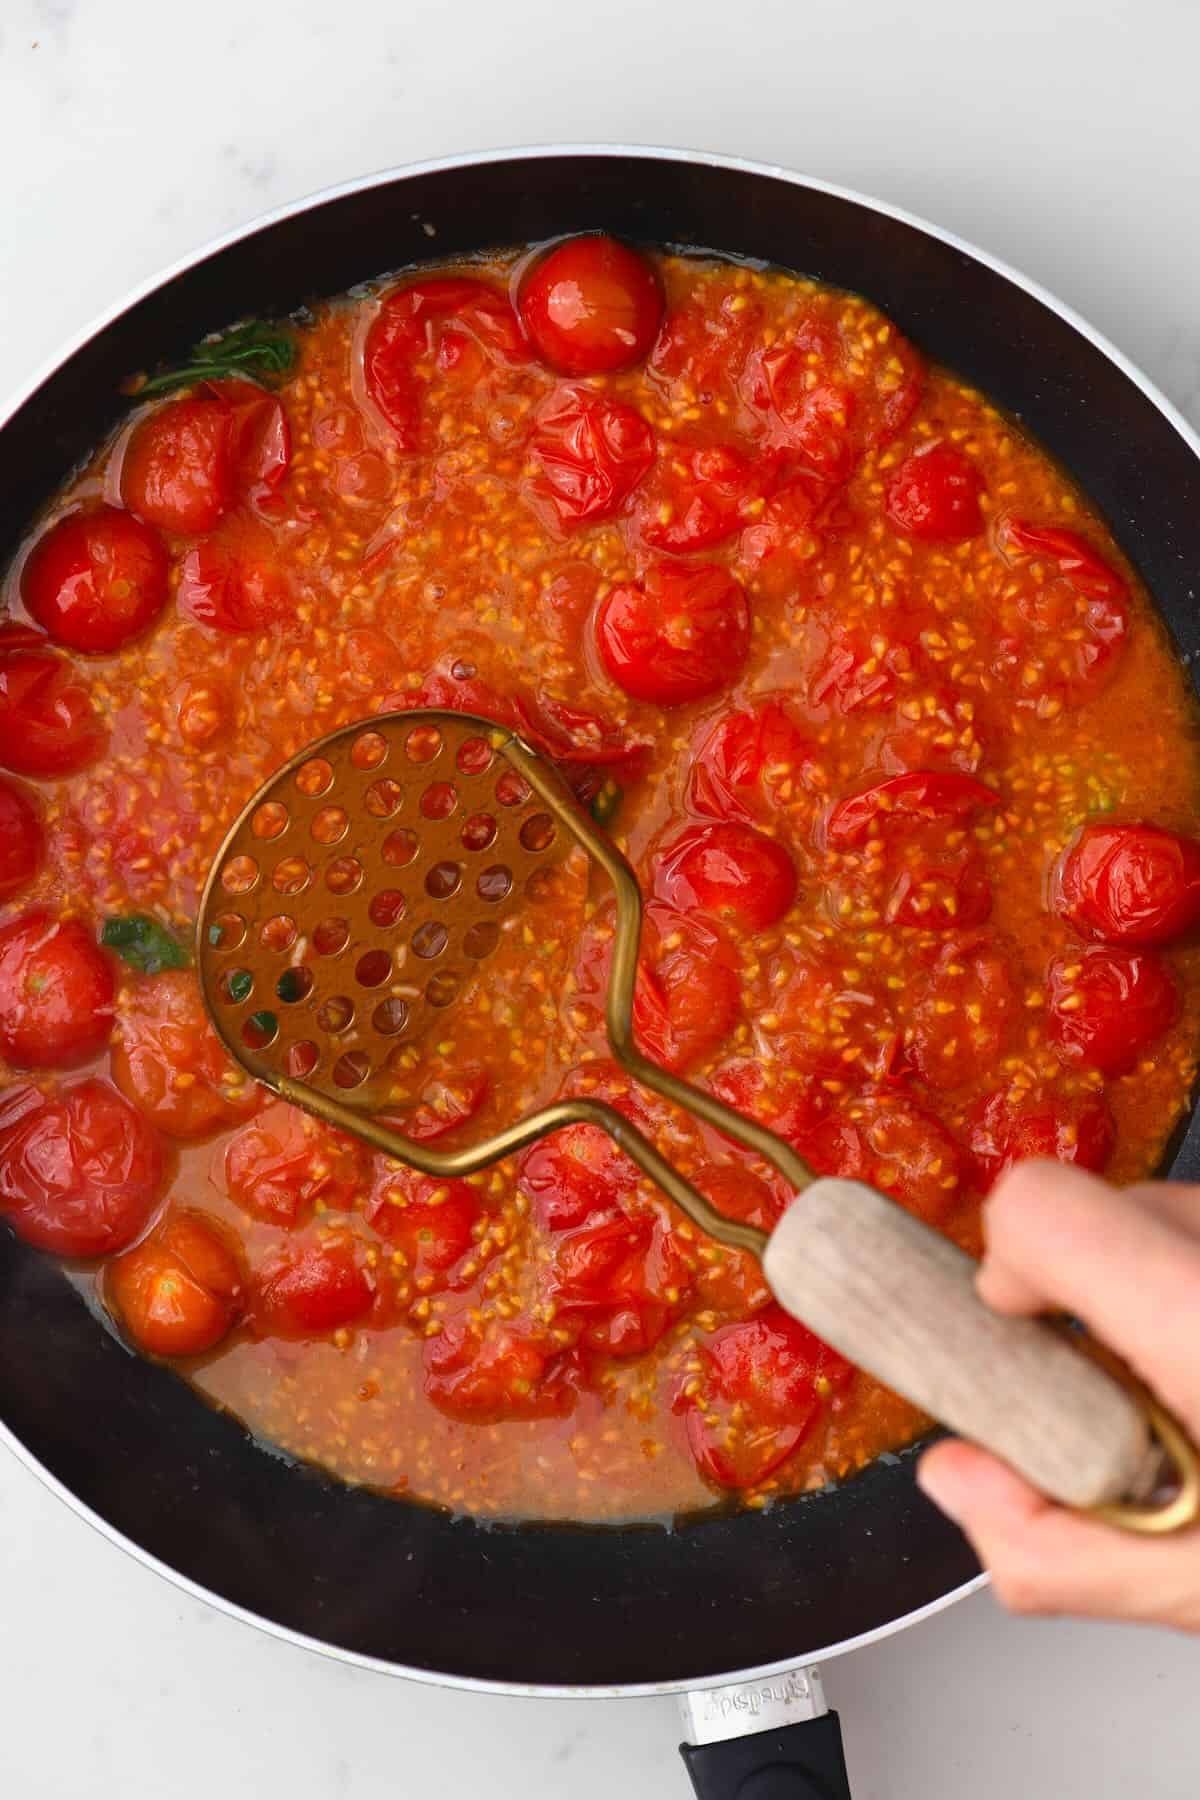 Mashing cooked tomatoes